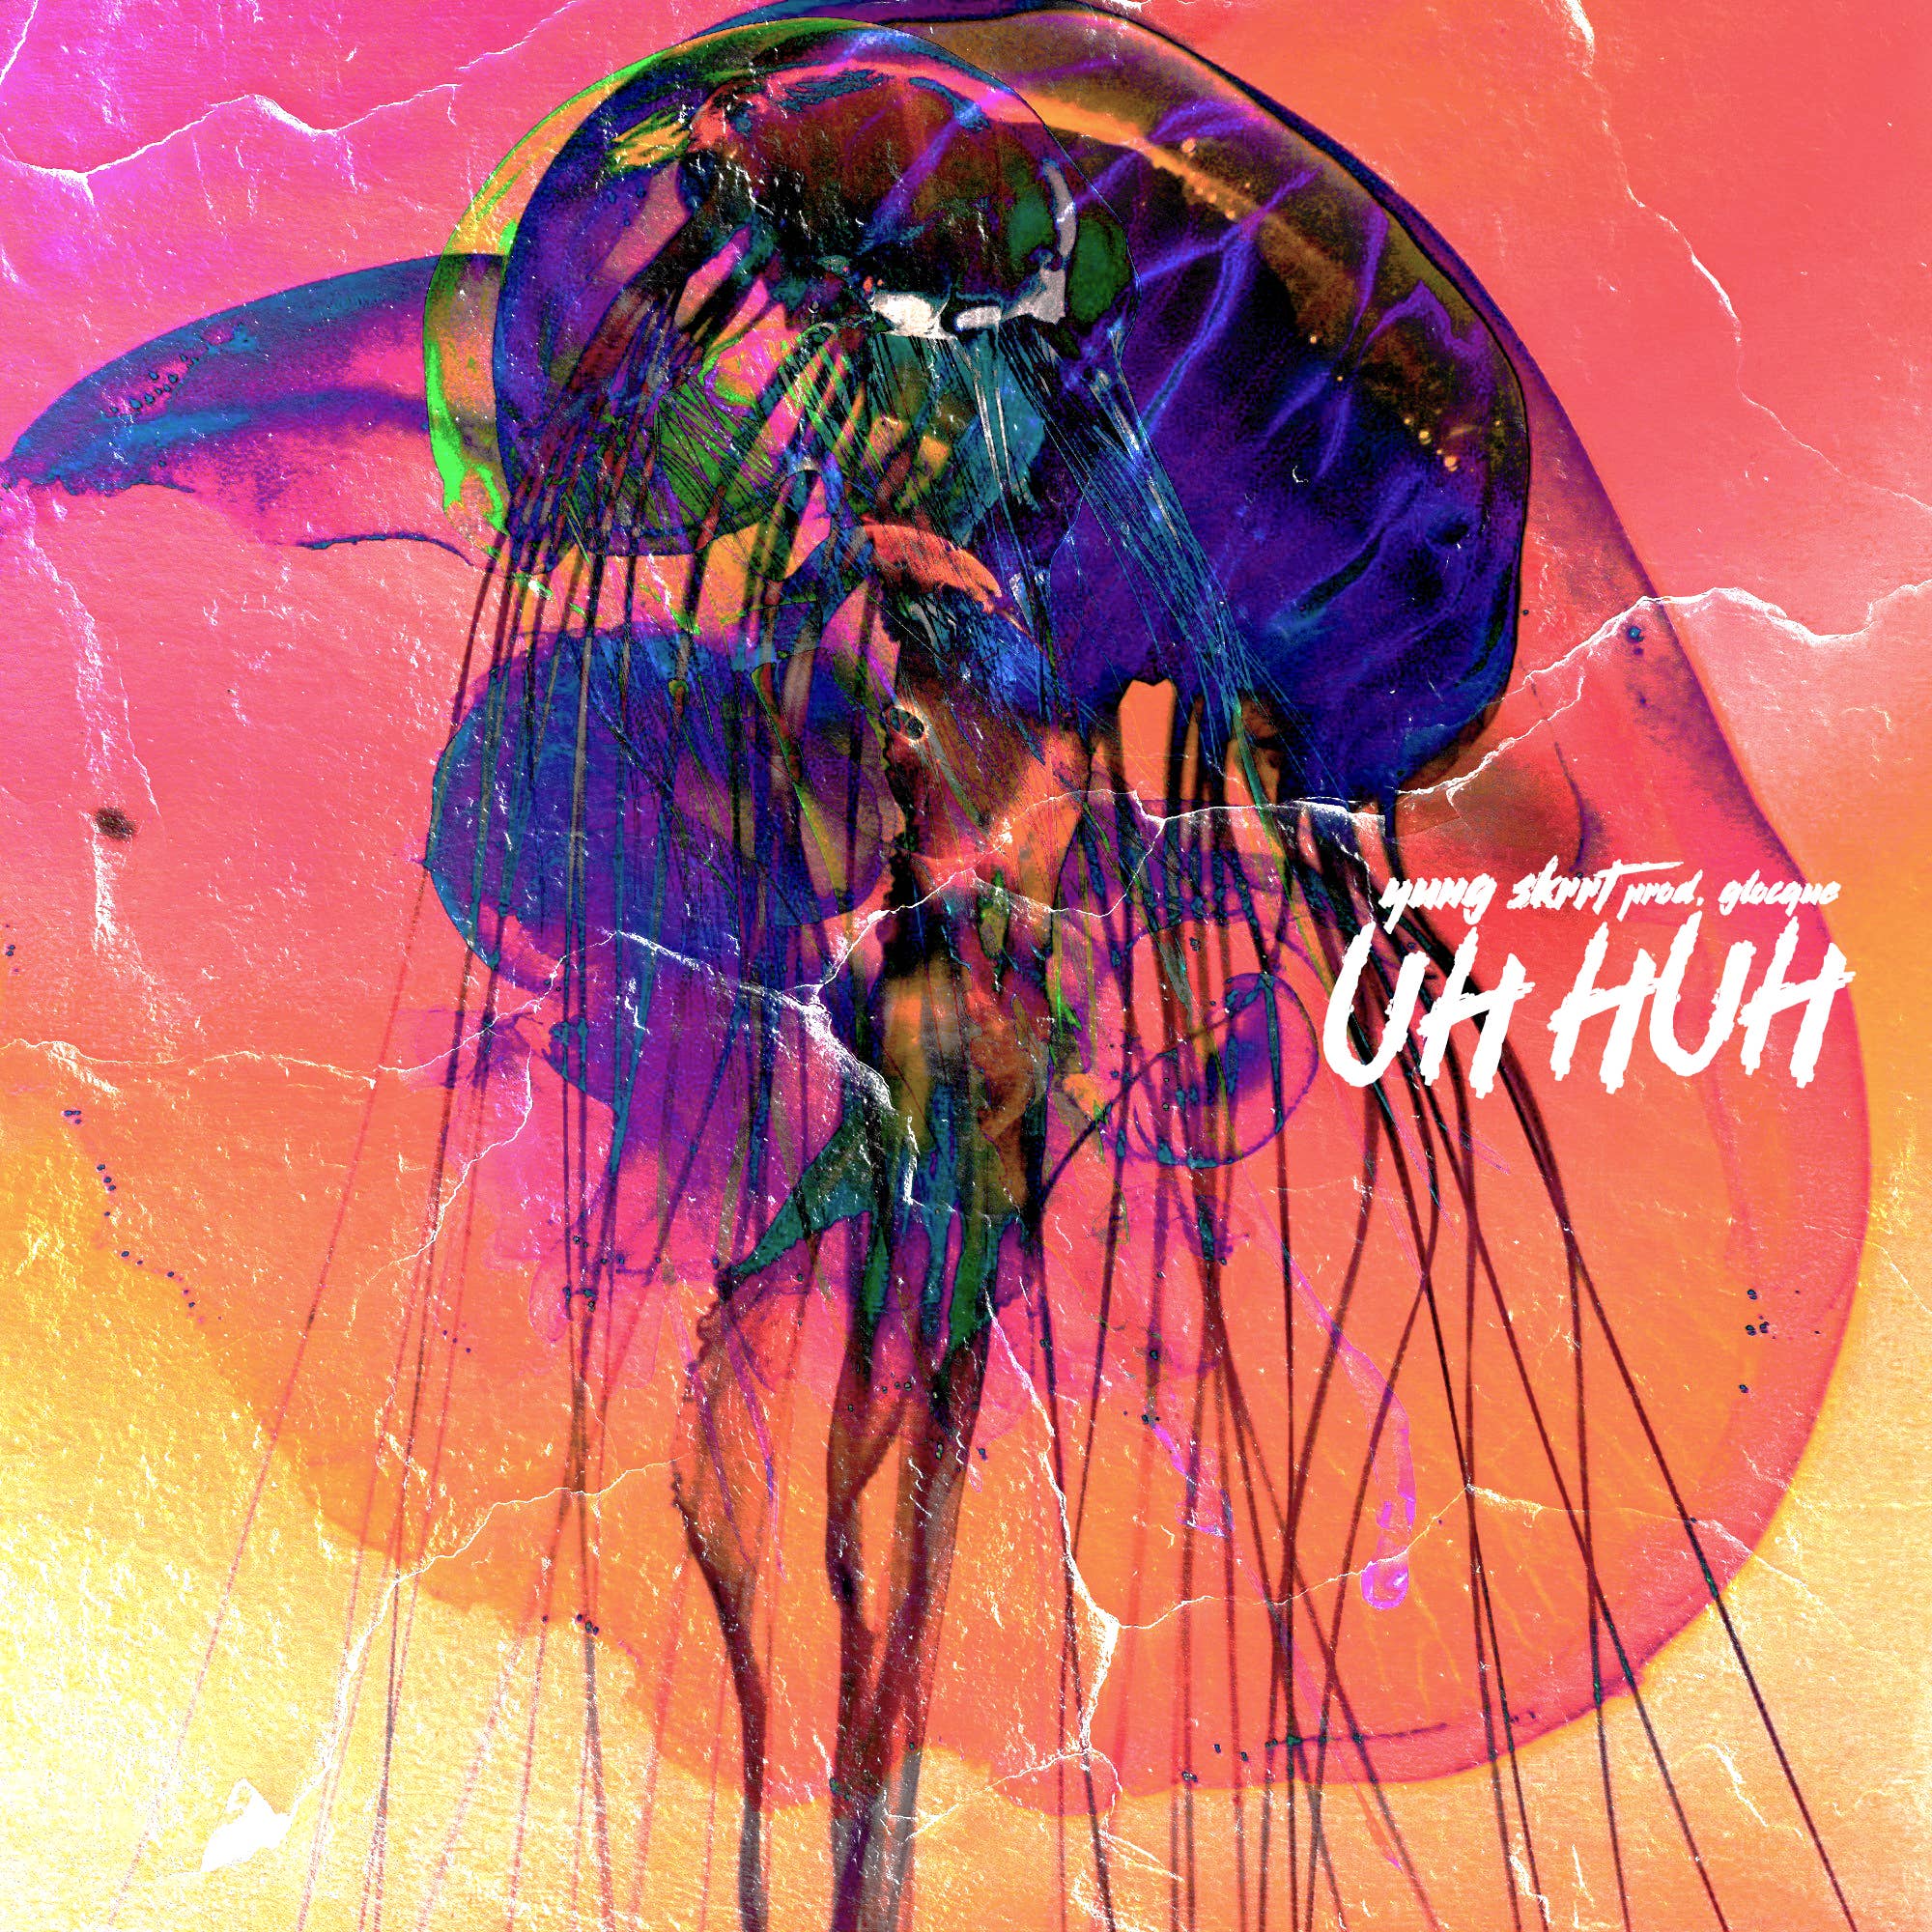 Yung Skrrt's "Uh Huh" cover art.